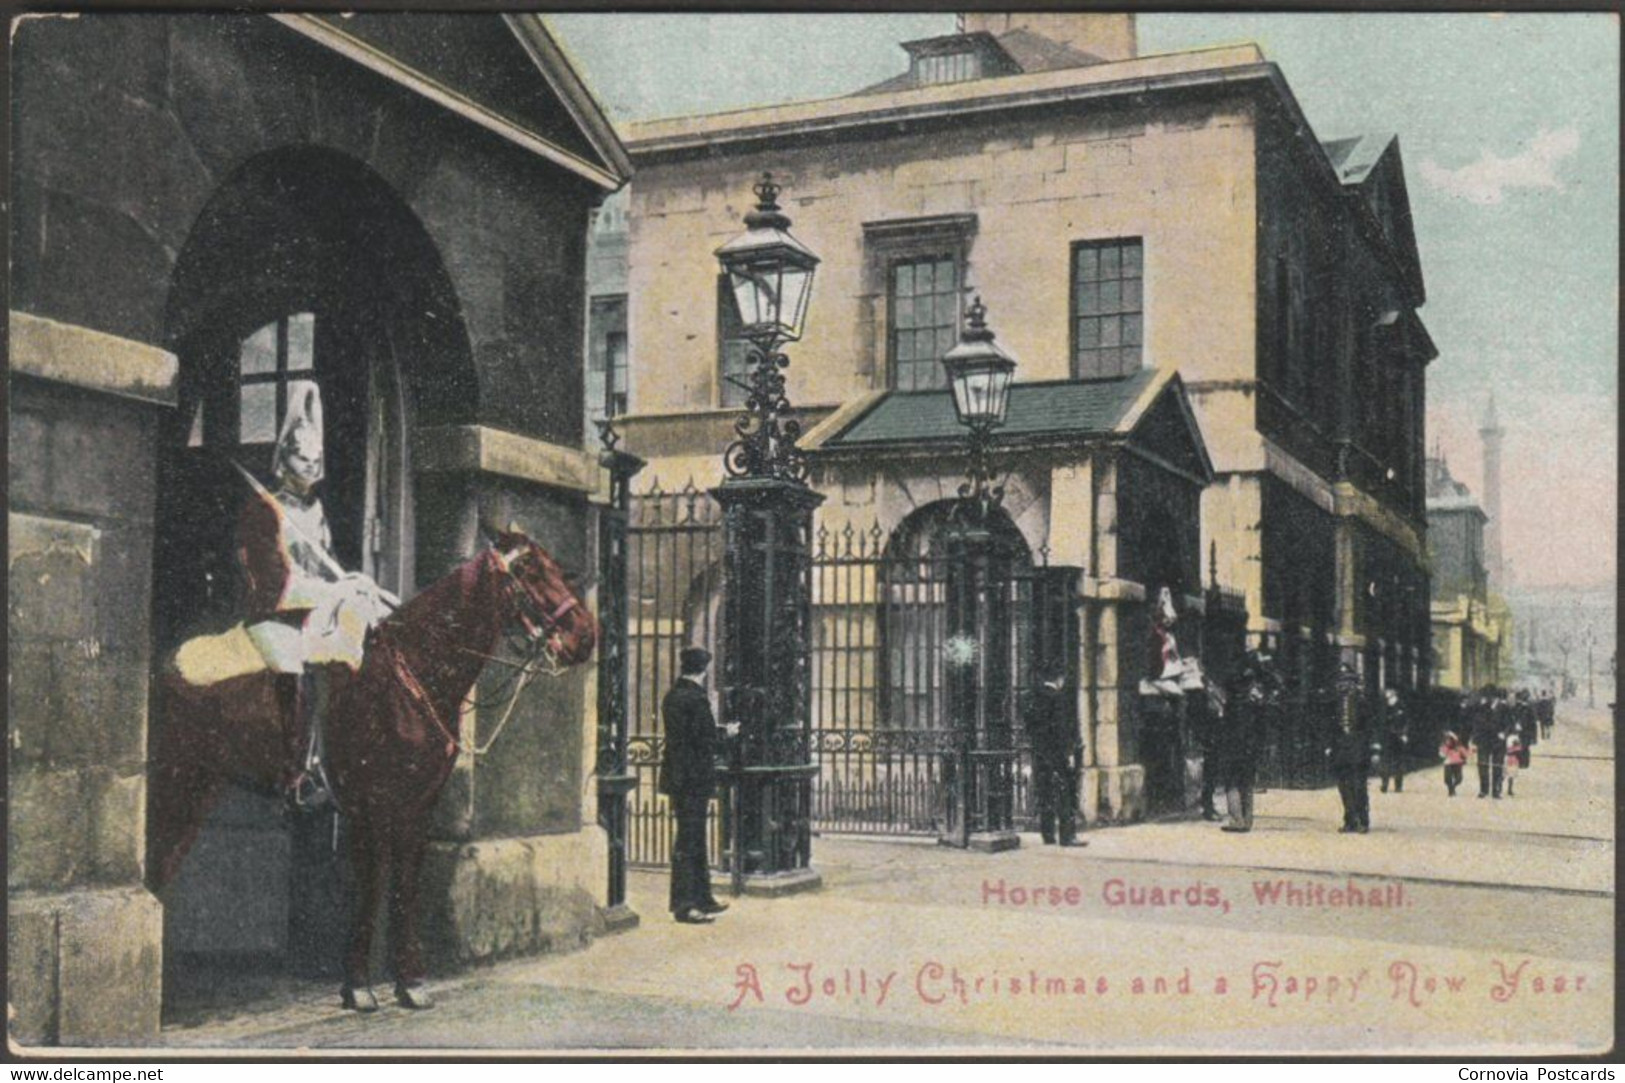 Horse Guards, Whitehall, London, C.1905 - Postcard - Whitehall